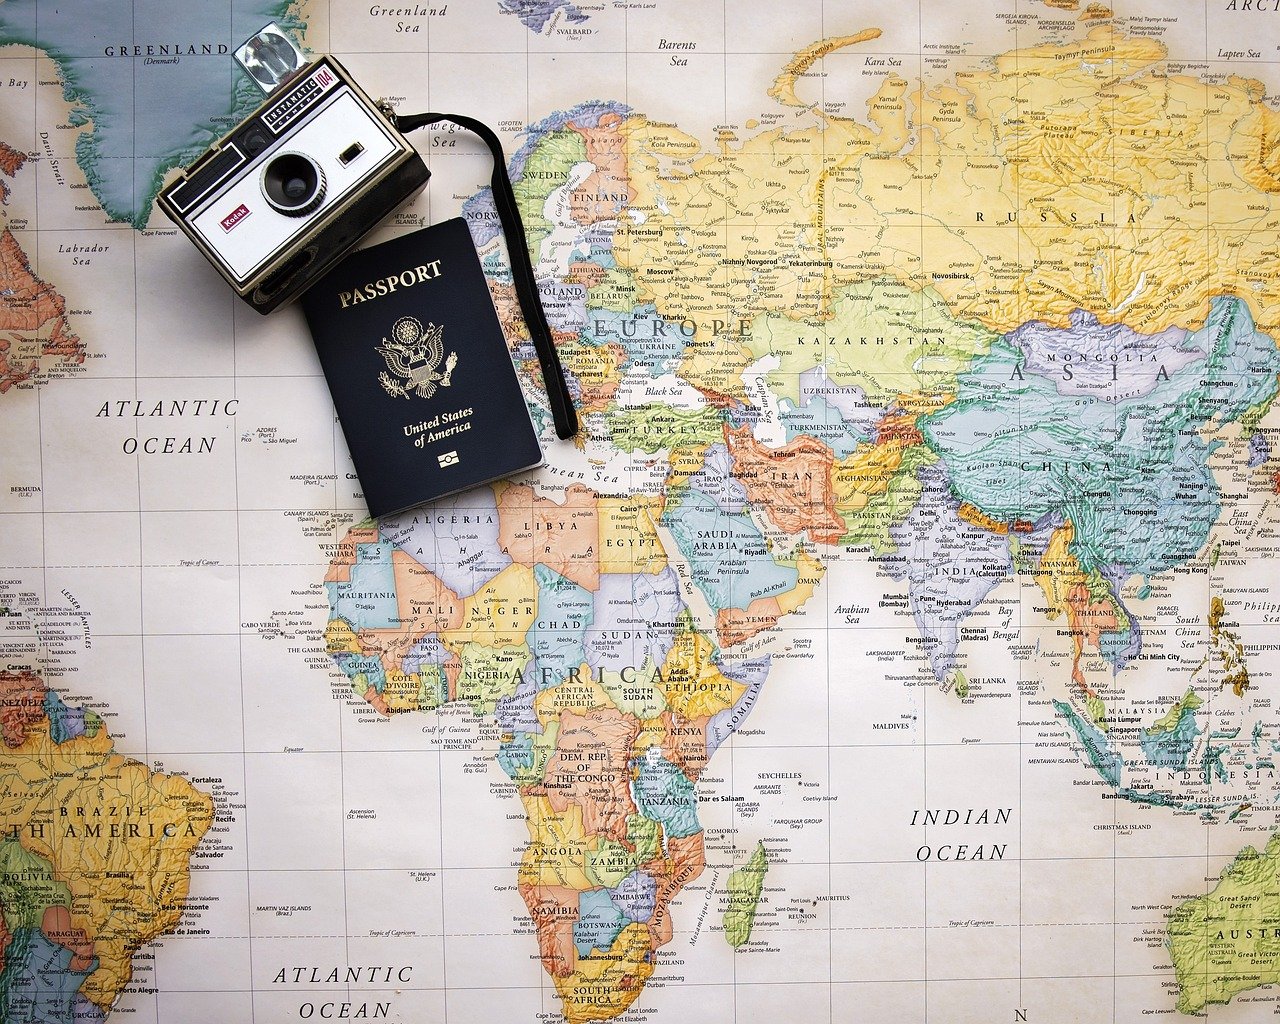 Understanding Keywords in the Travel Industry